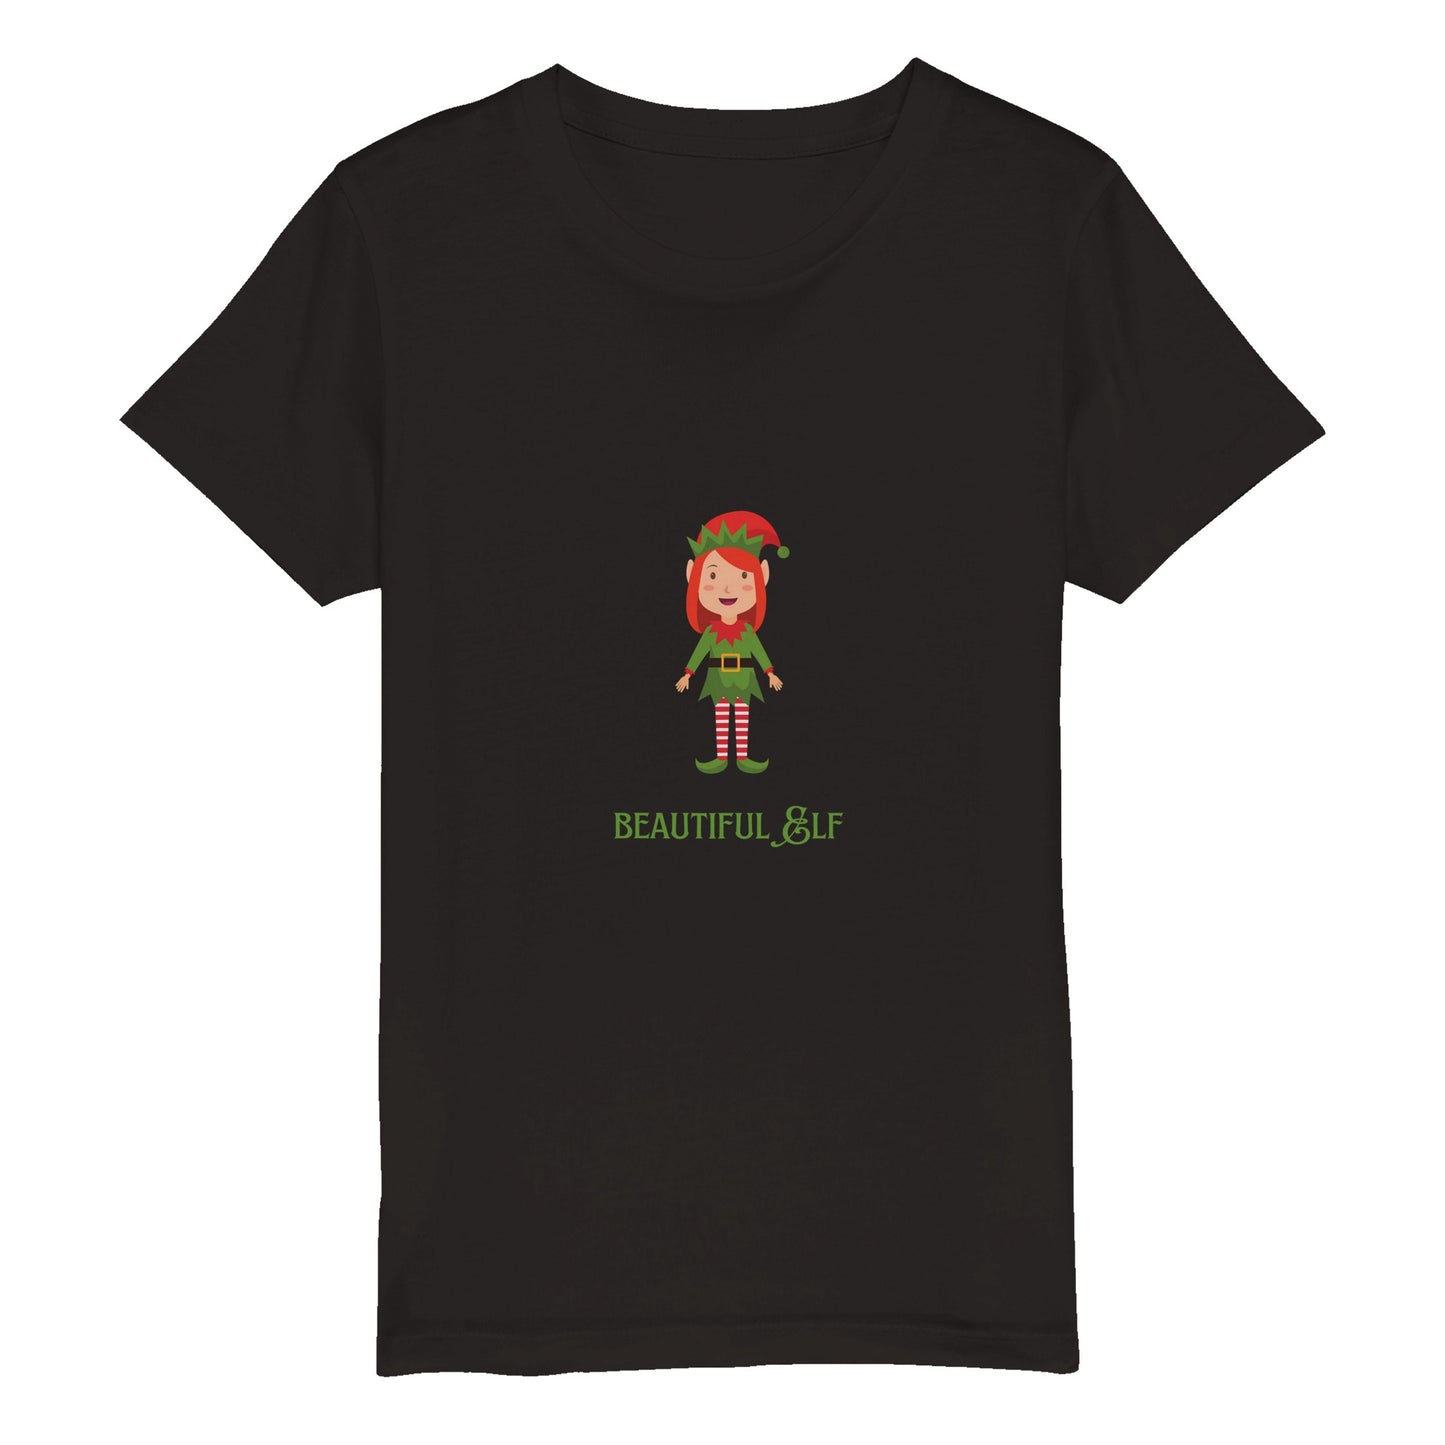 Organic Kids "Beautiful Elf" T-shirt